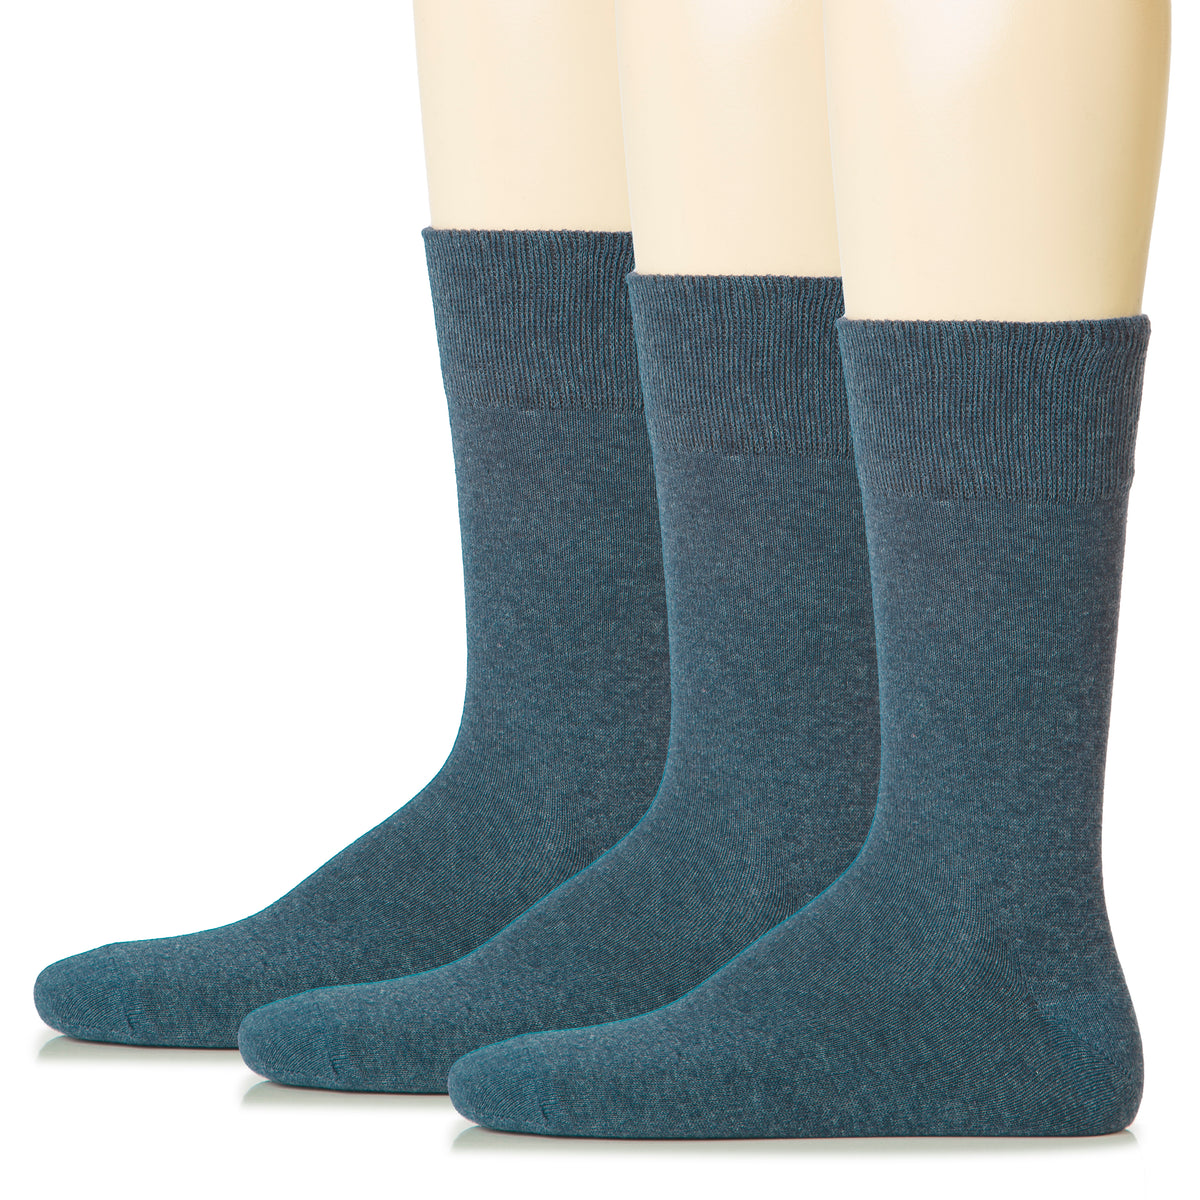 Hugh Ugoli Men Cotton Dress Socks XL / L / M / S Sizes, 3 Pairs | Shoe Size: 6-8 | Indigo